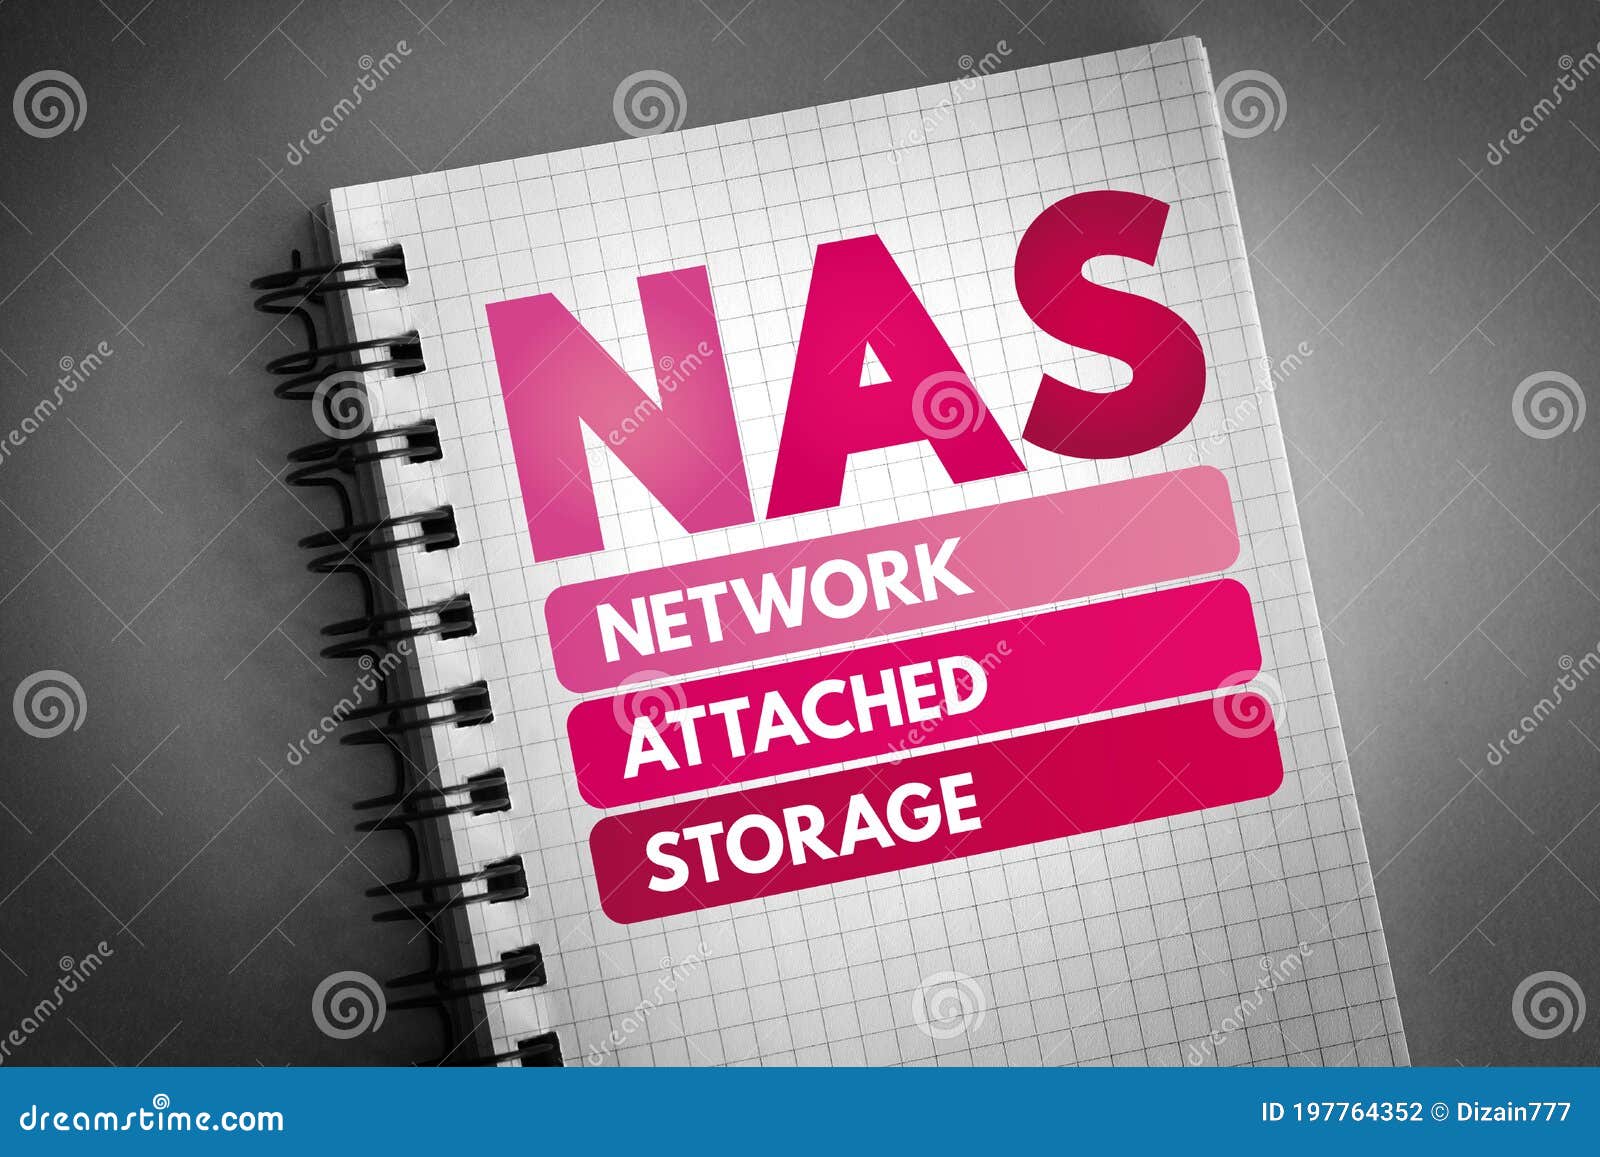 nas - network attached storage acronym